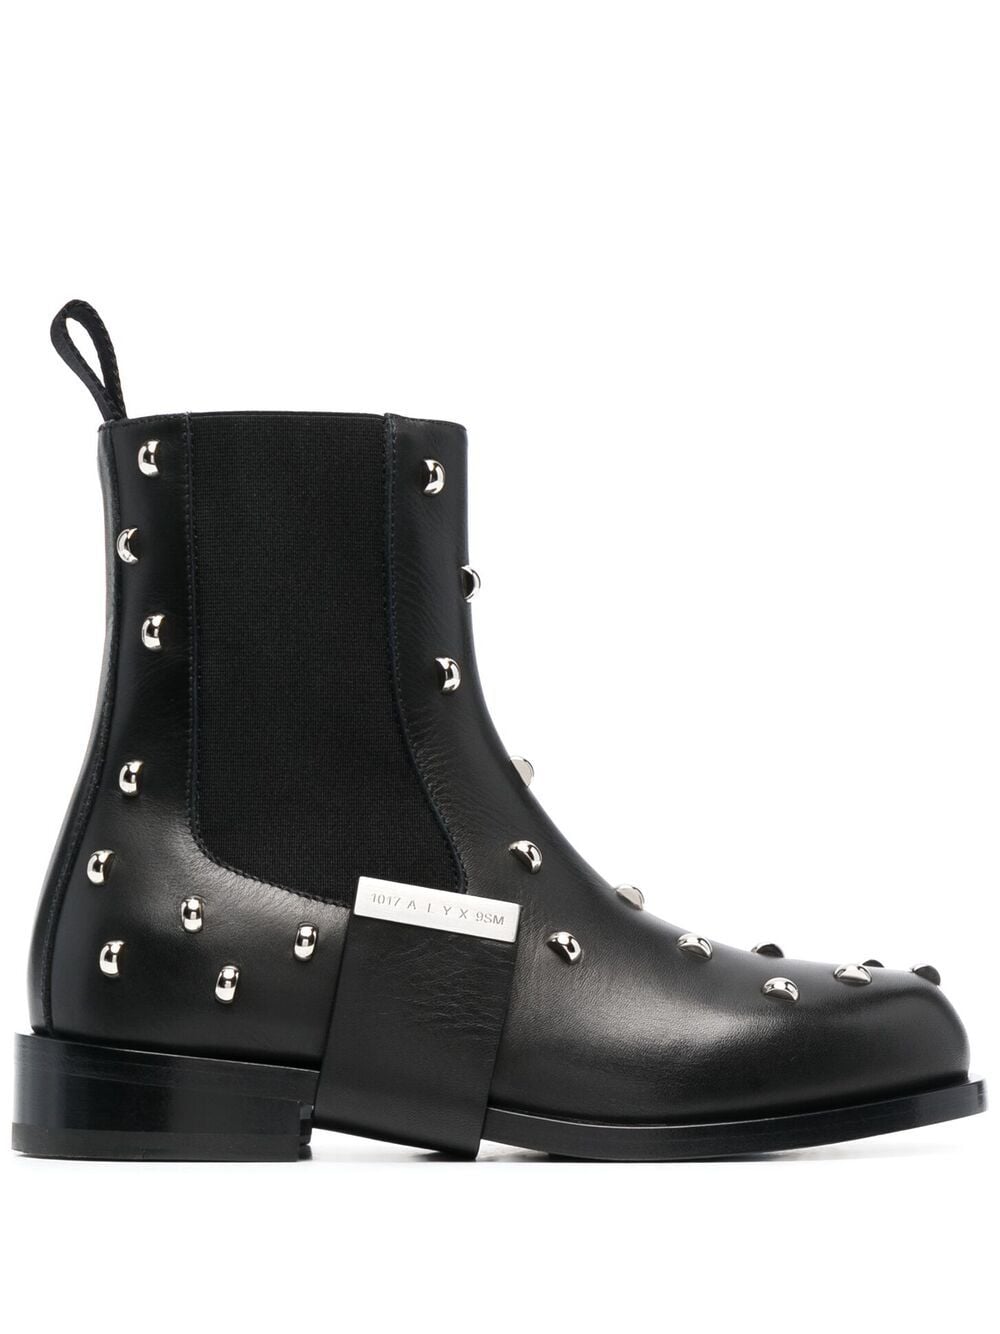 1017 ALYX 9SM studded Chelsea boots - Black von 1017 ALYX 9SM